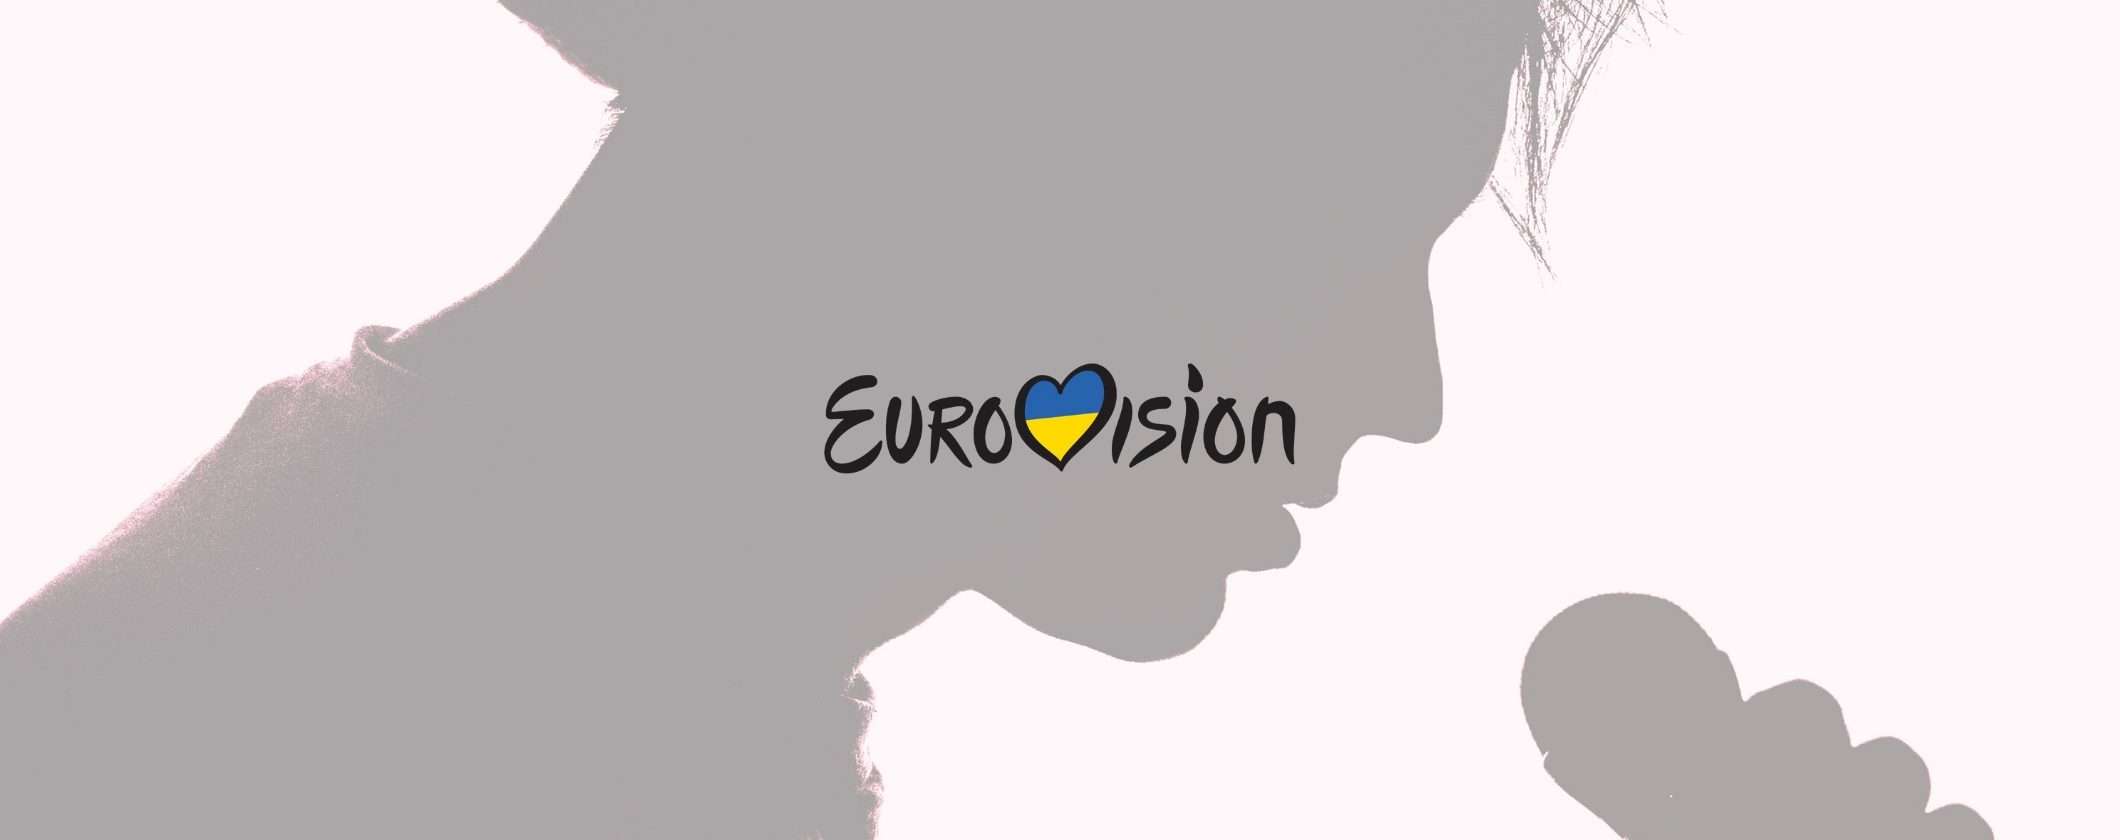 Eurovision Song Contest: guardalo in streaming dall'estero